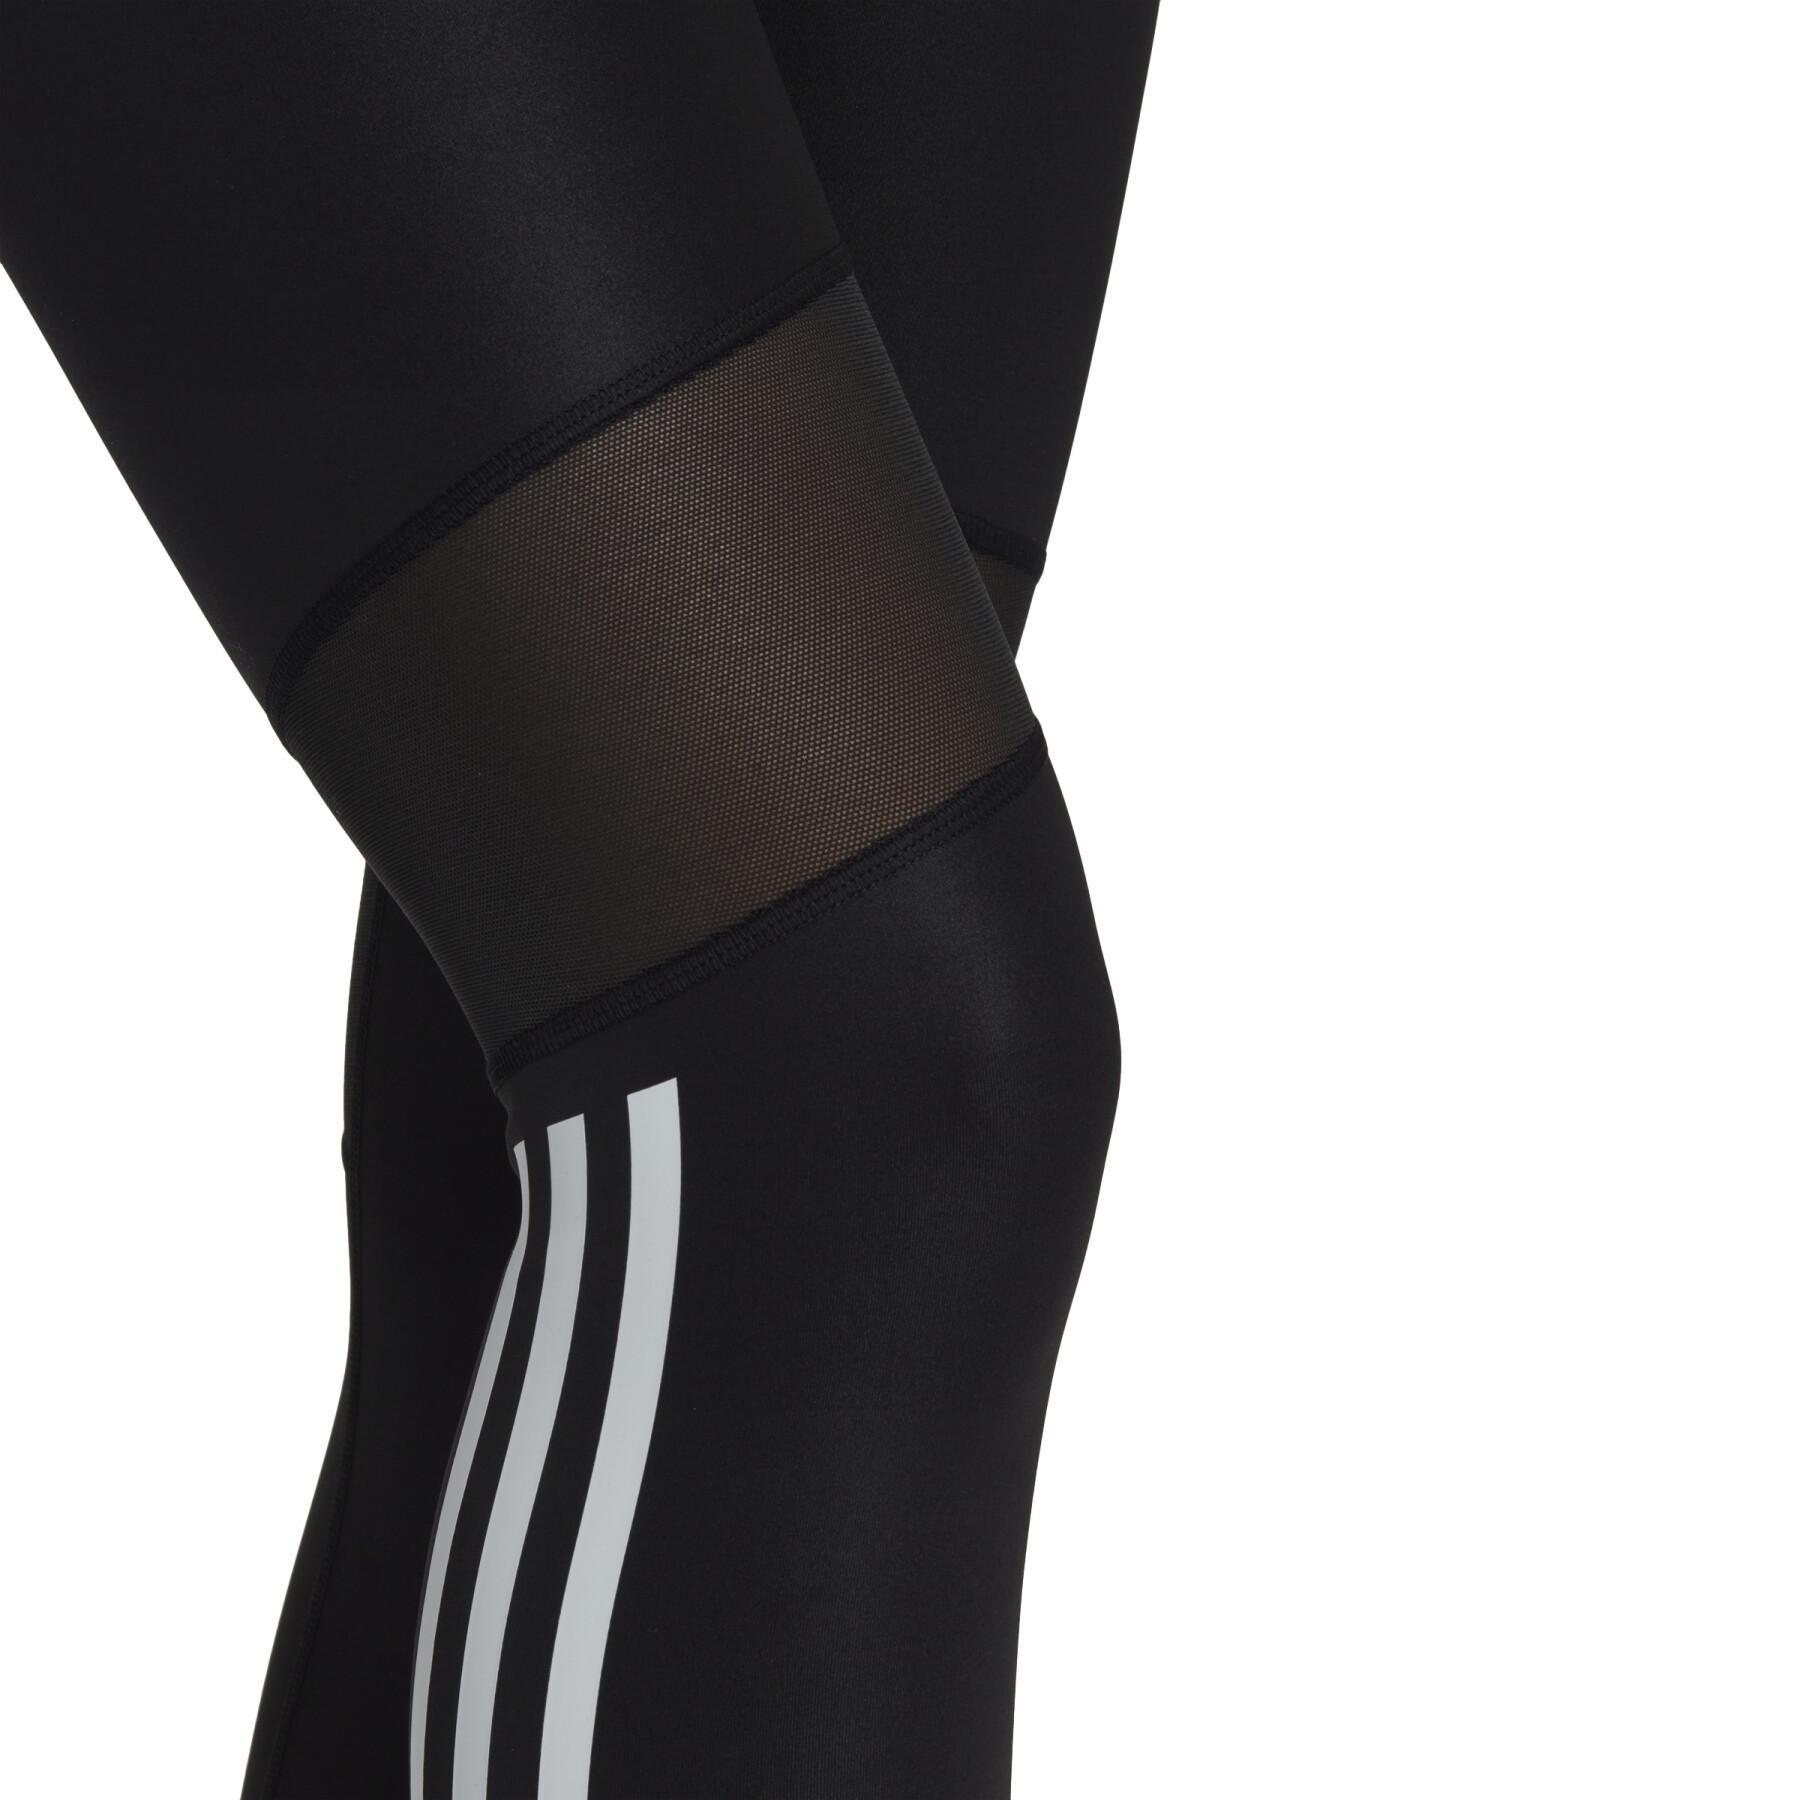 Legging 7/8 3 bands woman adidas Hyperglam - Textile - Crossfit - Physical  maintenance